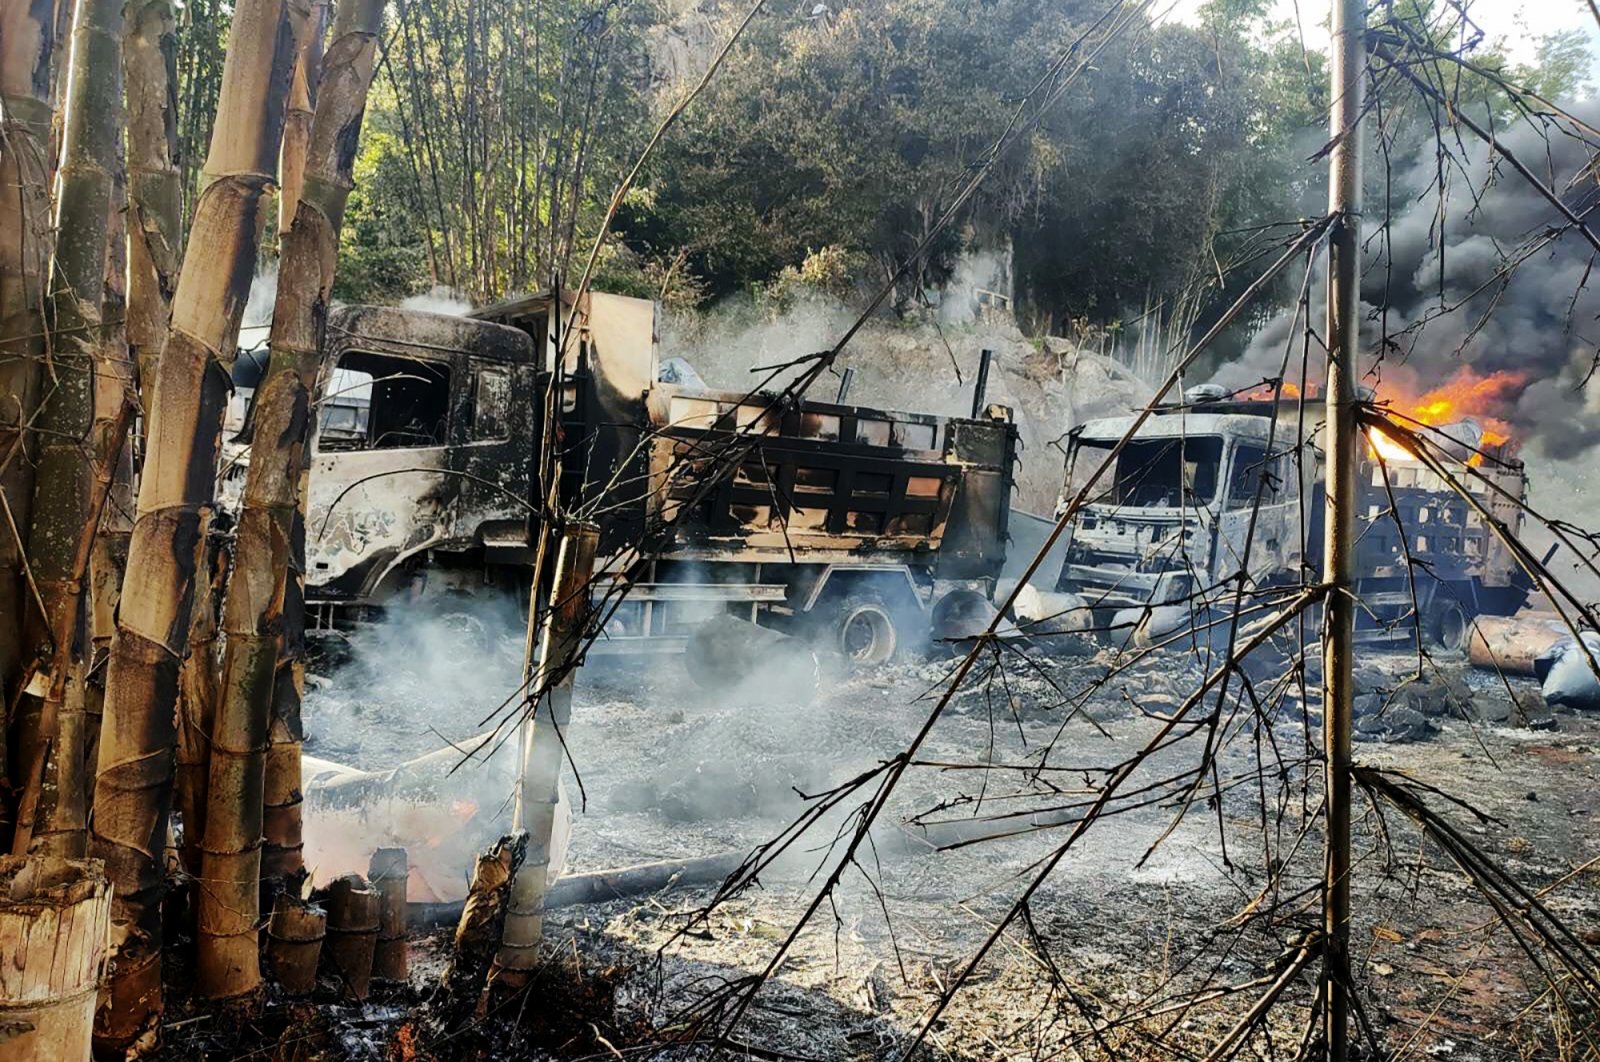 Smoke and flames billow from vehicles in Hpruso township, Kayah state, Myanmar, Dec. 24, 2021. (Karenni Nationalities Defense Force via AP)